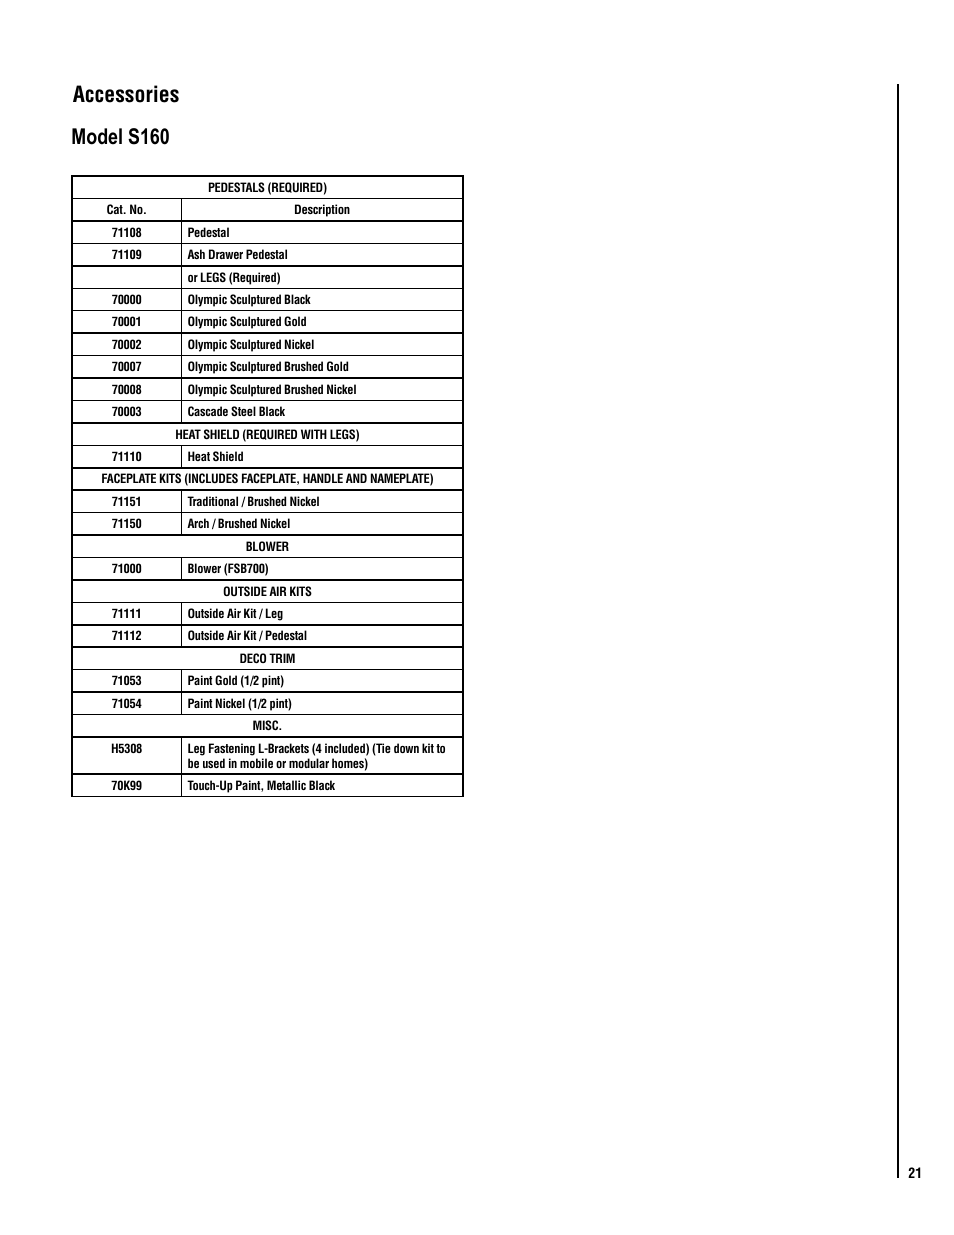 Accessories model s160 | LG MODEL STRIKER S160 User Manual | Page 21 / 22